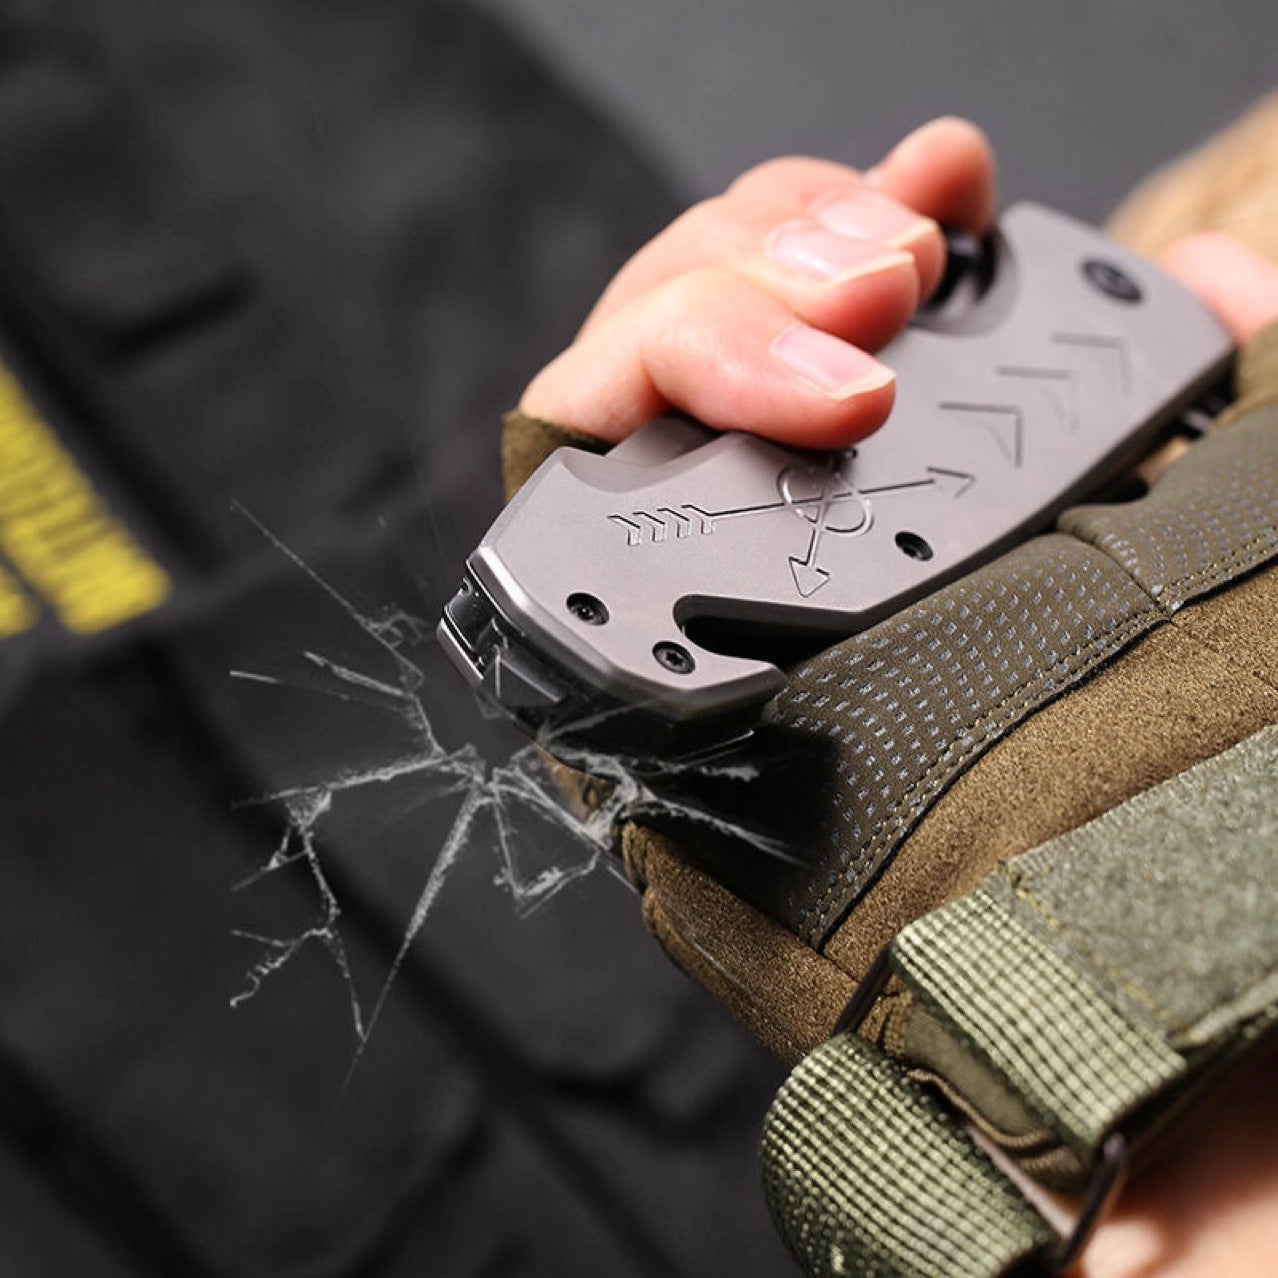 Browning FA18 Tactical Folding Knife Multifunctional Self-Defense EDC Camping Hunting Survival Portable Pocket Military Knives